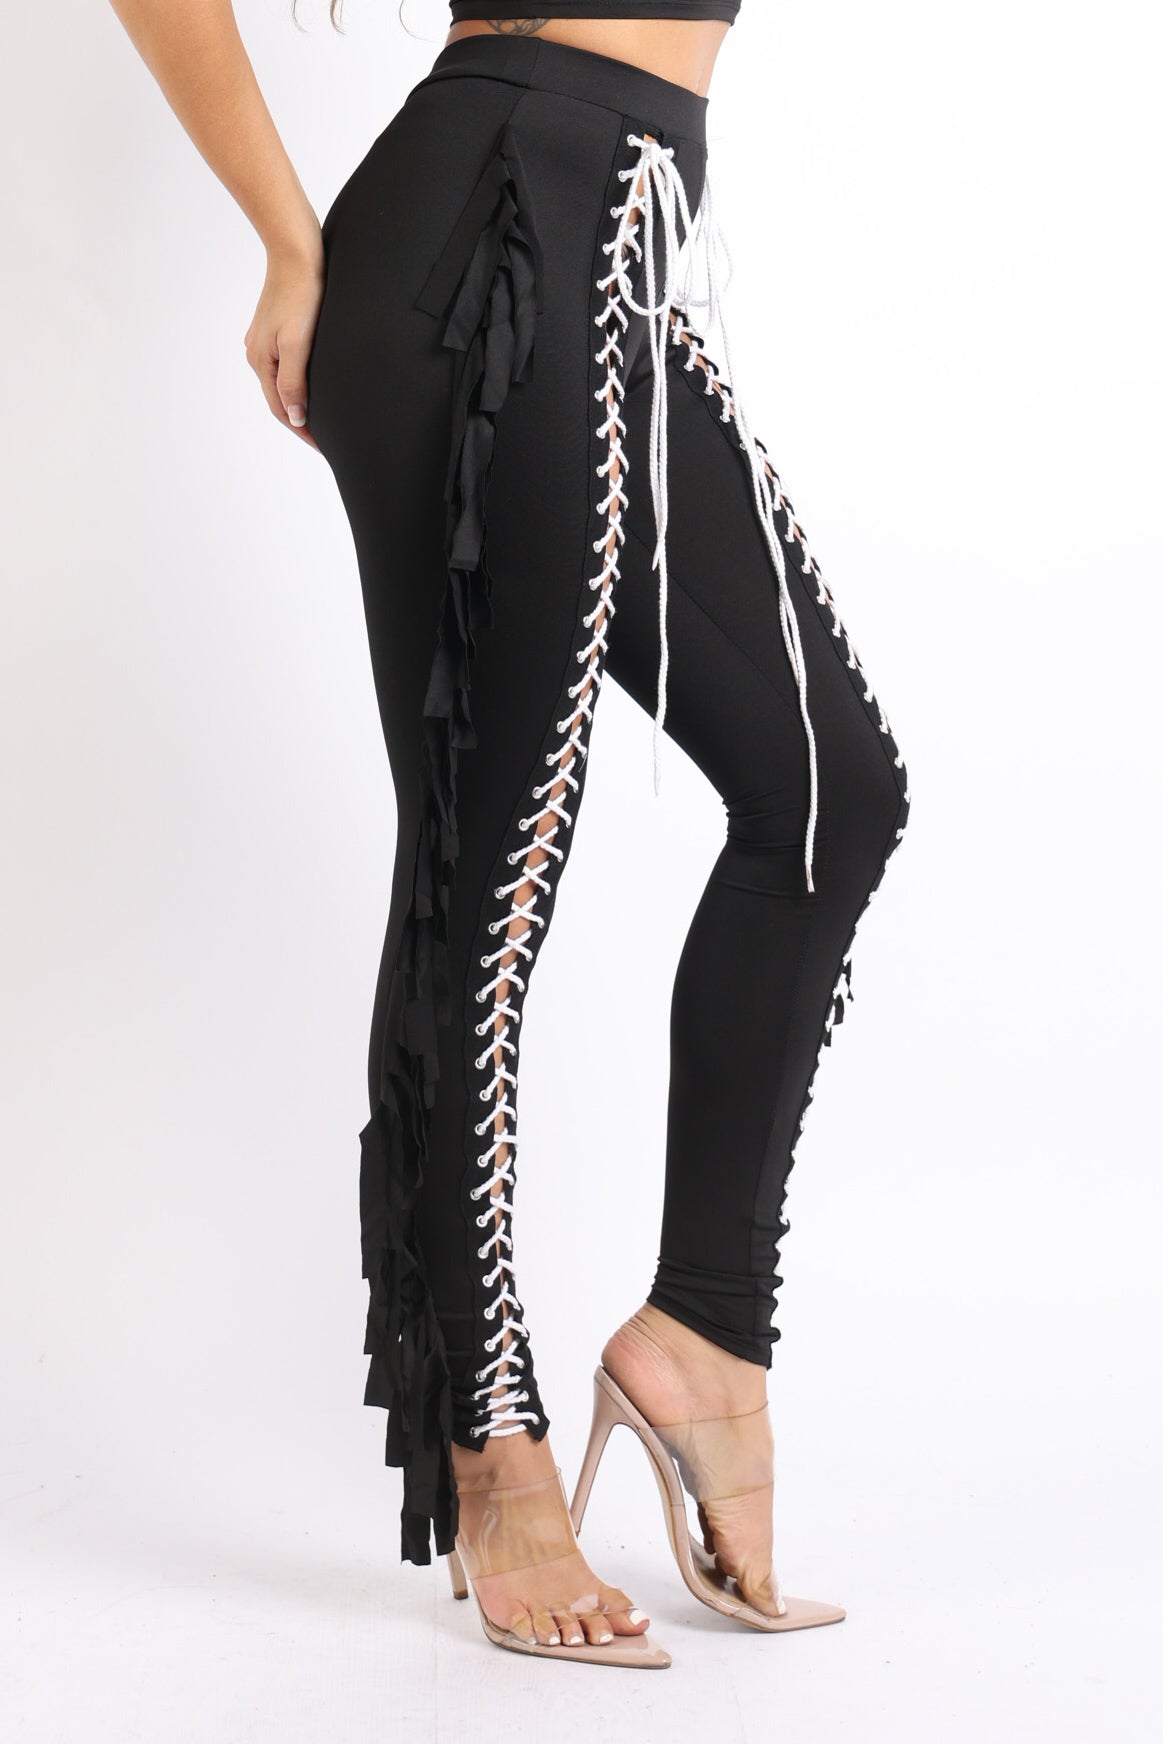 Chic Lace up Detailed Fringe Tassel Pants Leggings BLACK